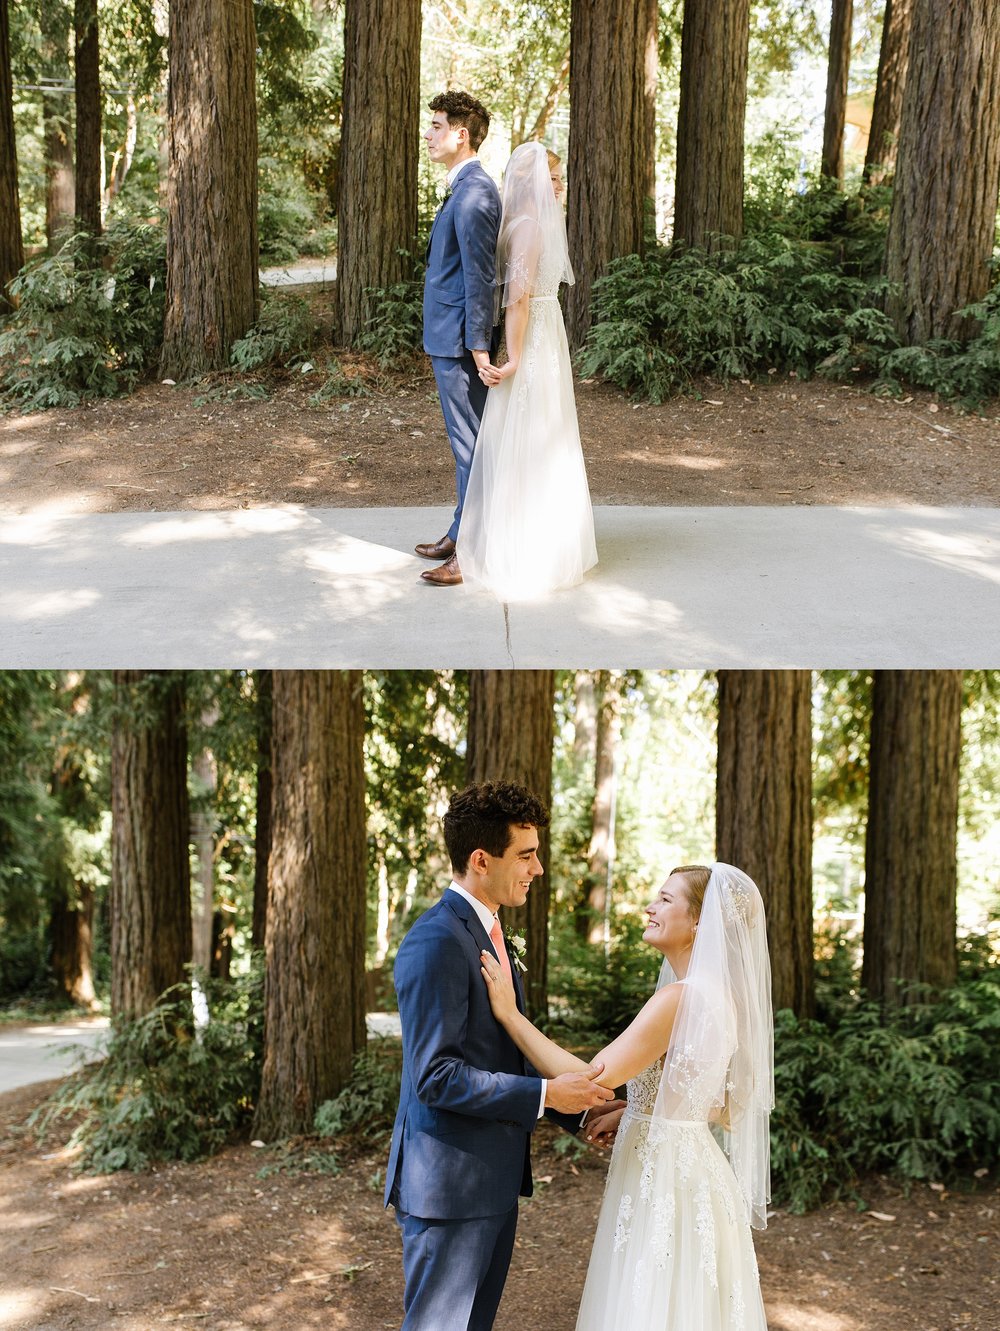 Amphitheatre-of-the-Redwoods-wedding-erikariley_chelsea-dier-photography_0006.jpg